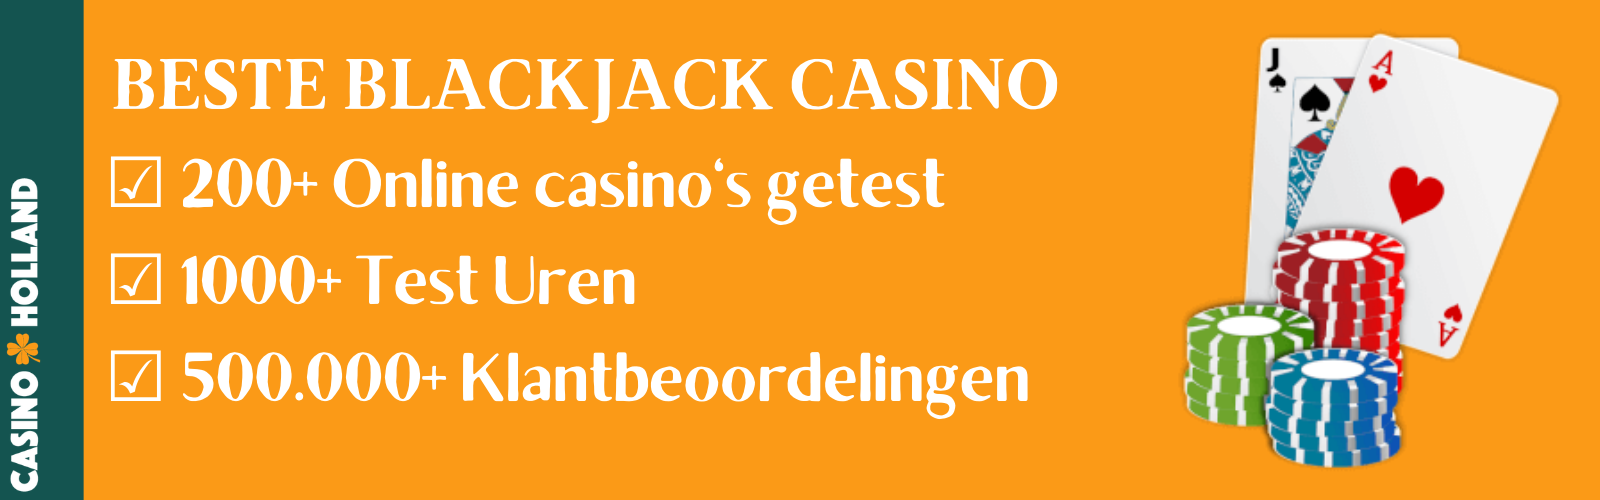 Beste Blackjack casino